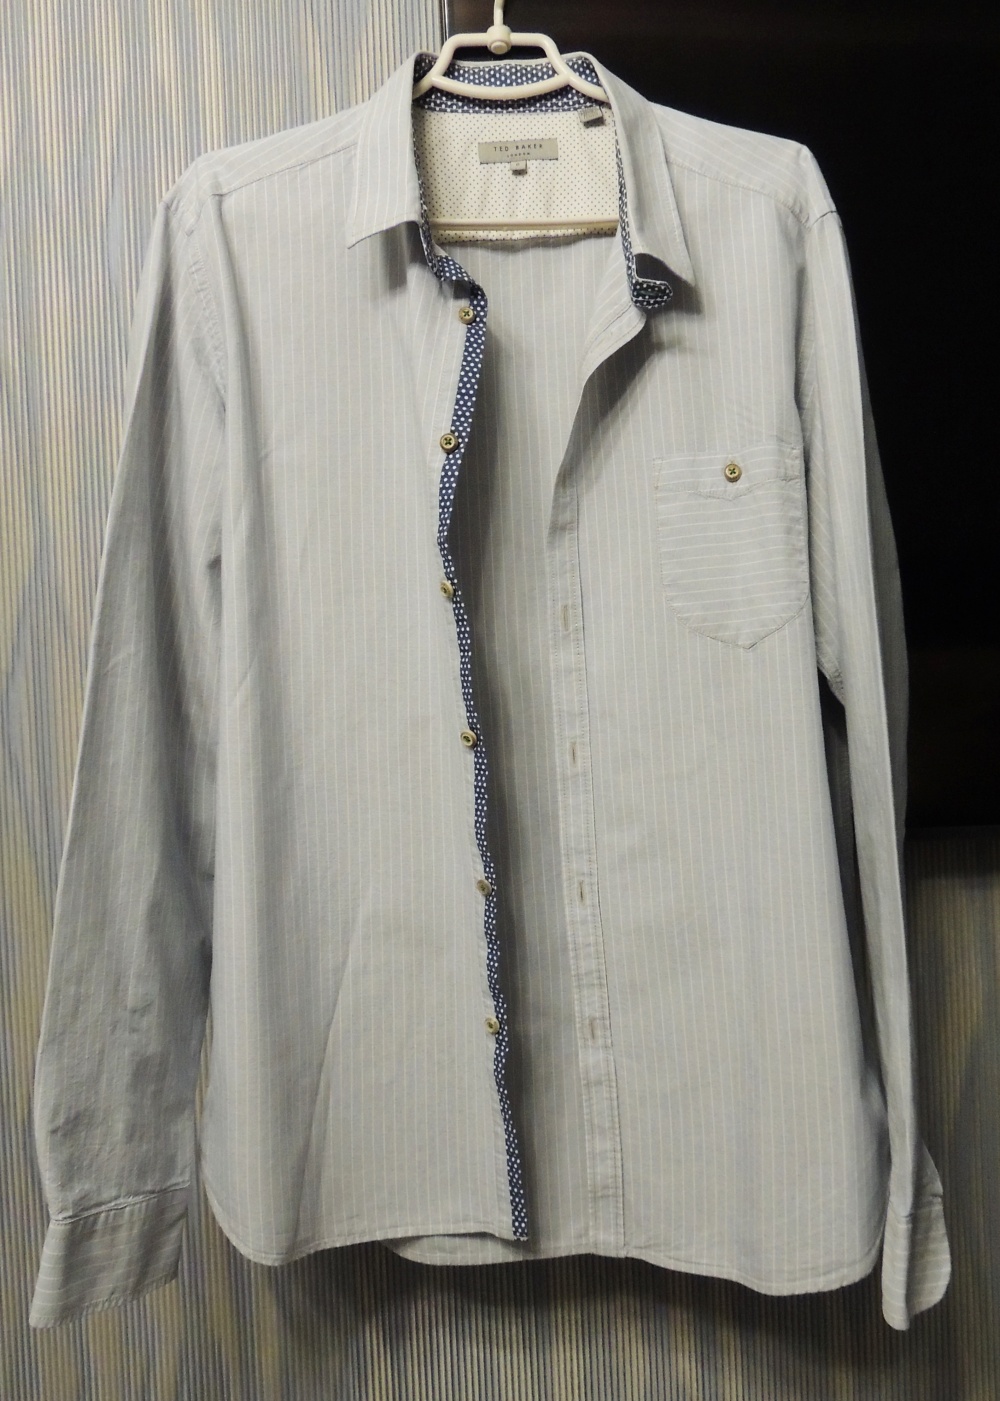 Рубашка Ted Baker. 48-50 размер